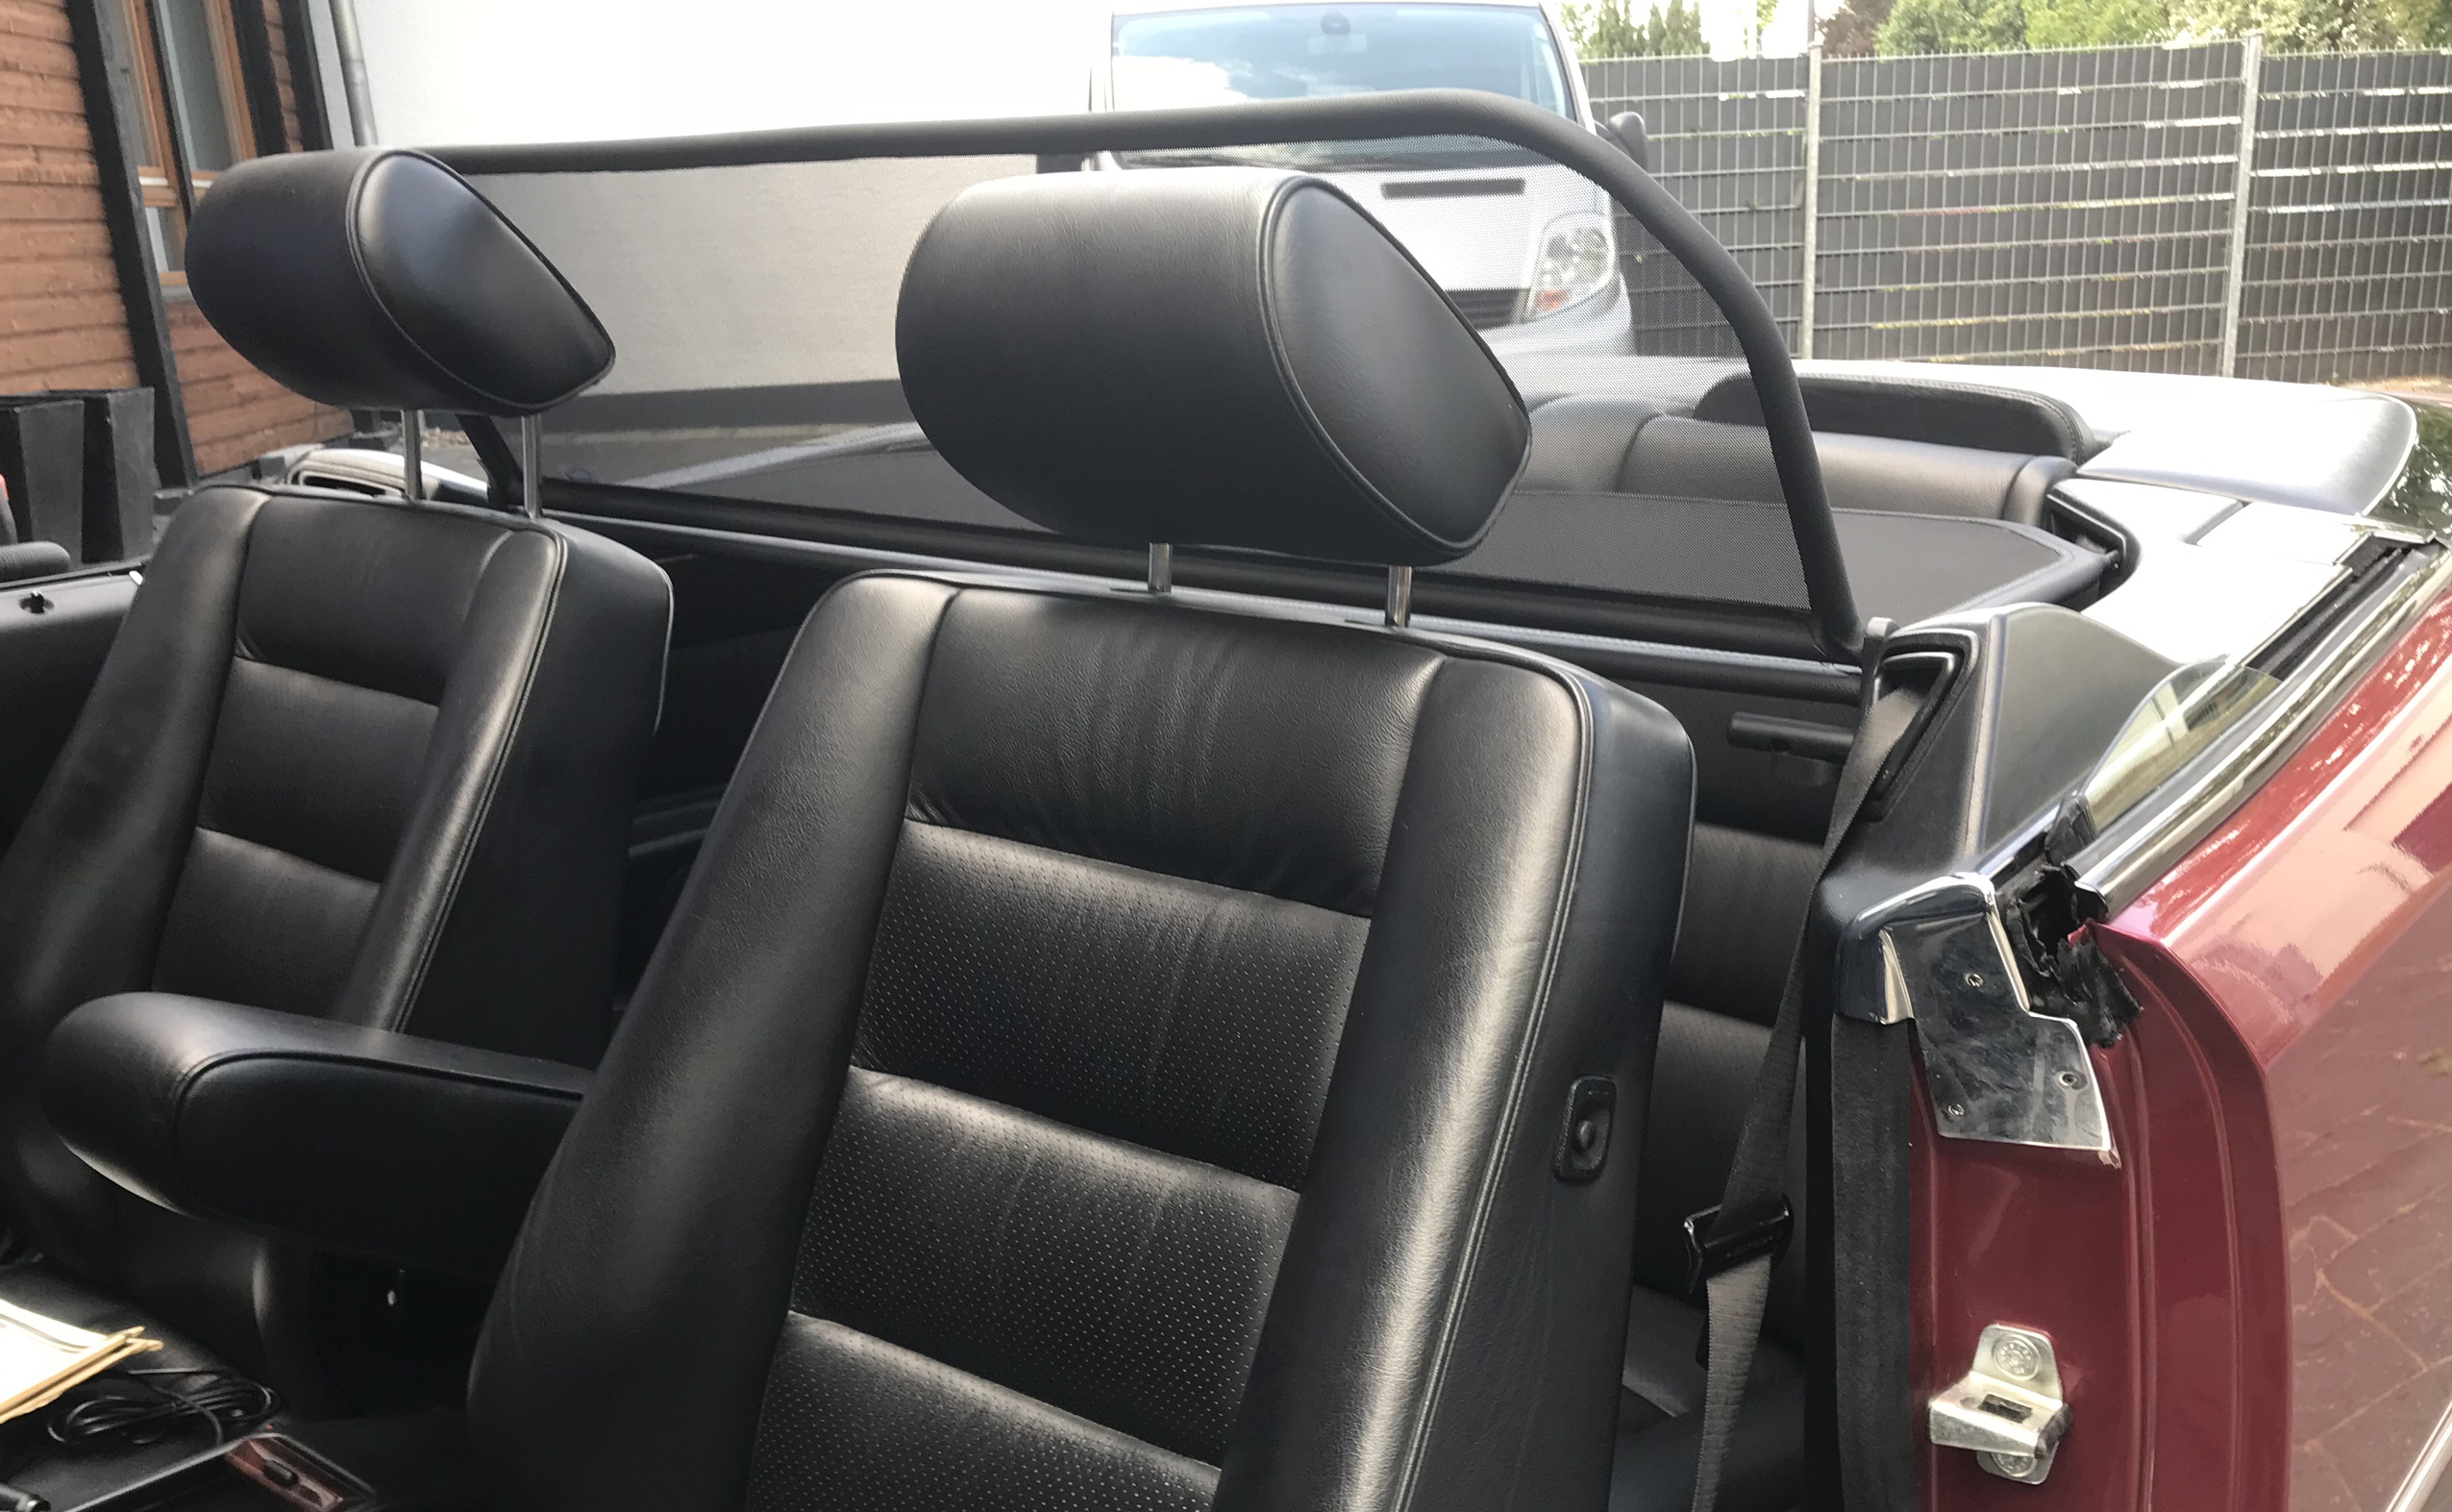 Airax windscherm geschikt voor Mercedes E-Klasse A 124 Cabrio  